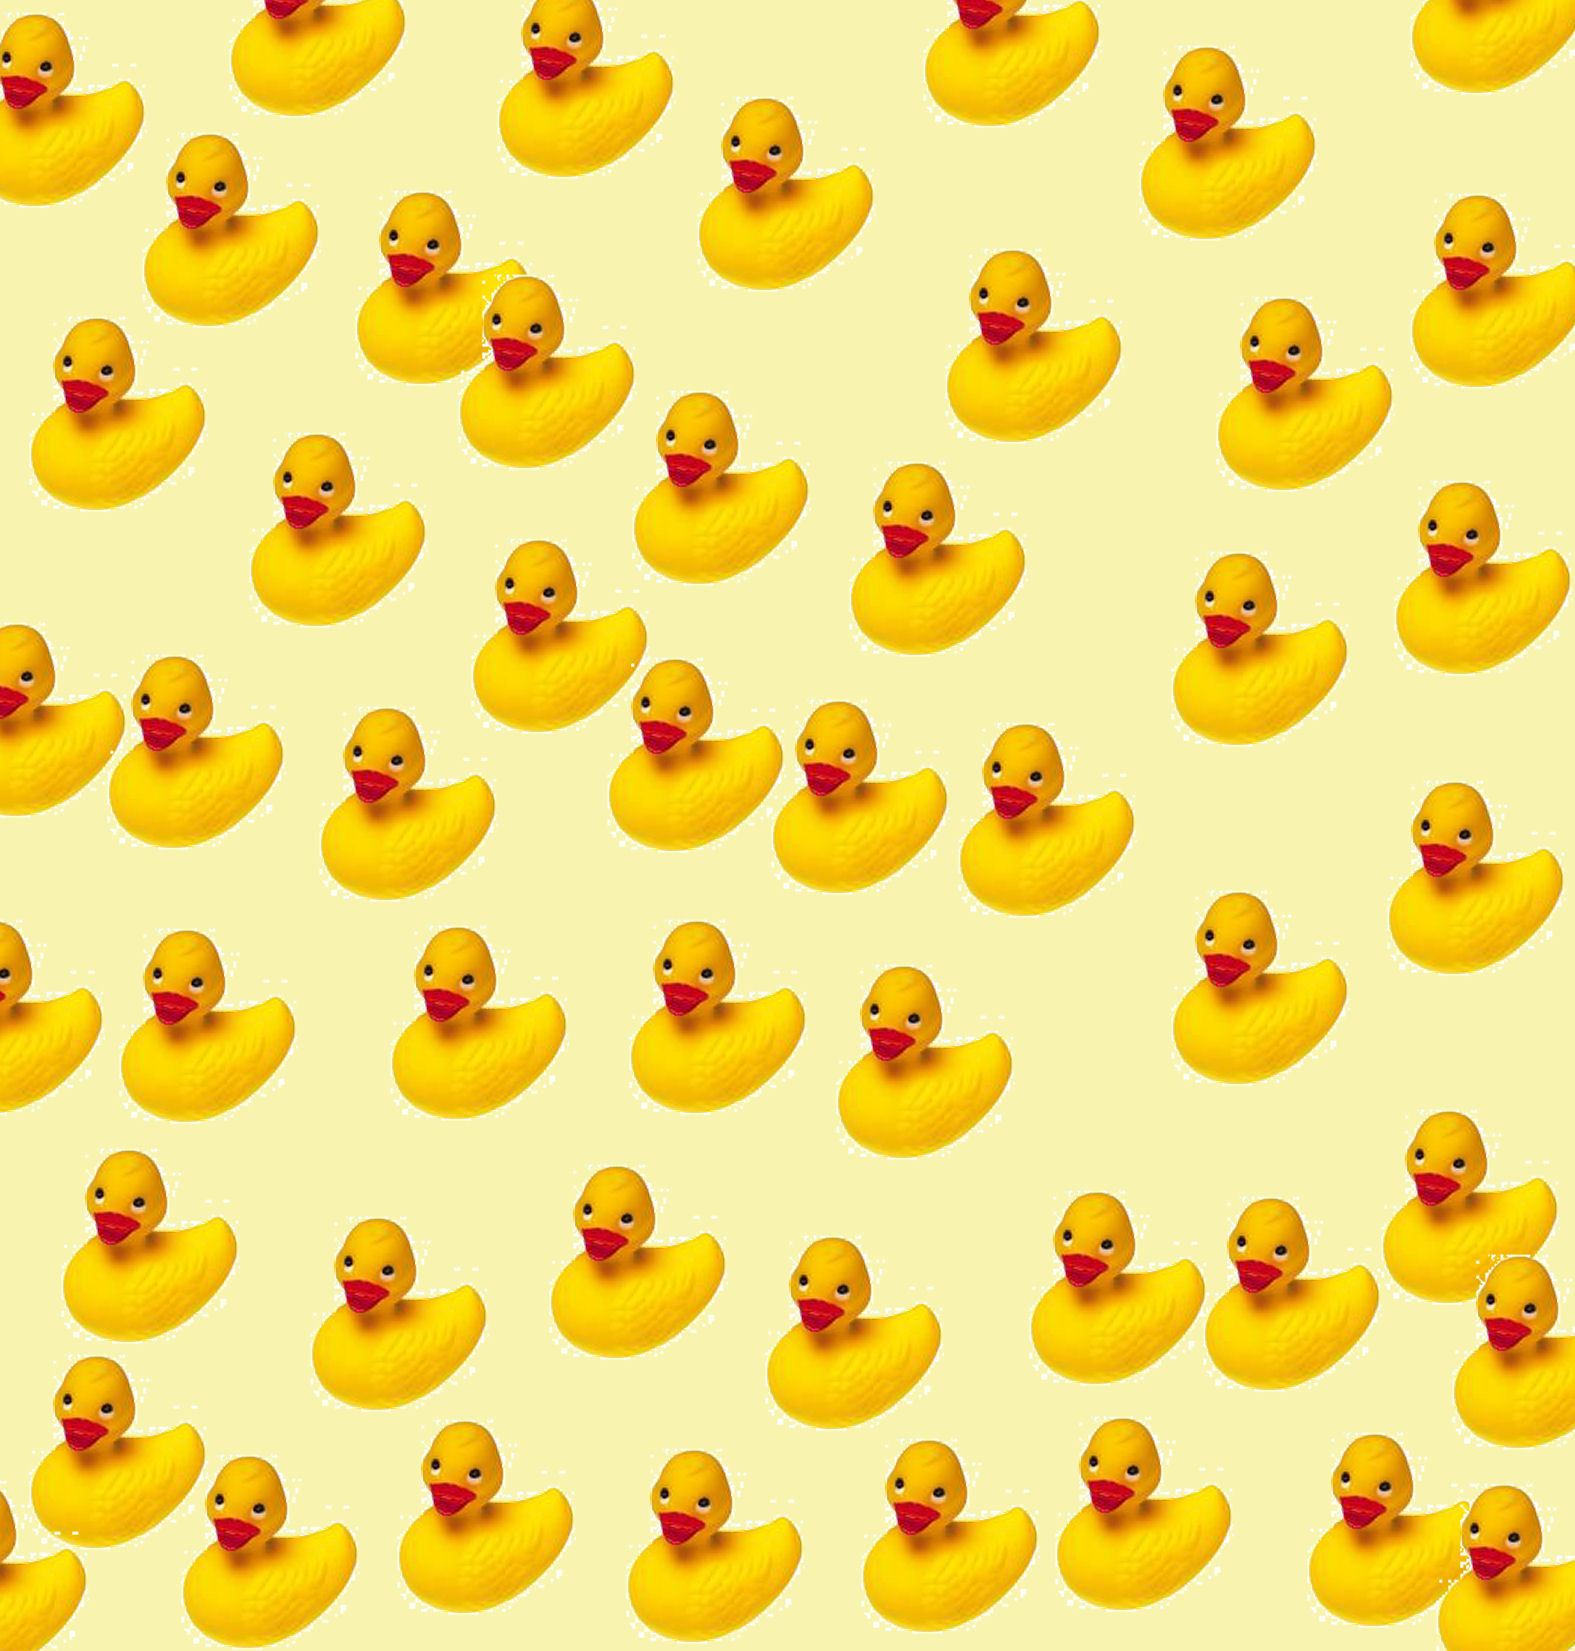 Rubber Ducks Background